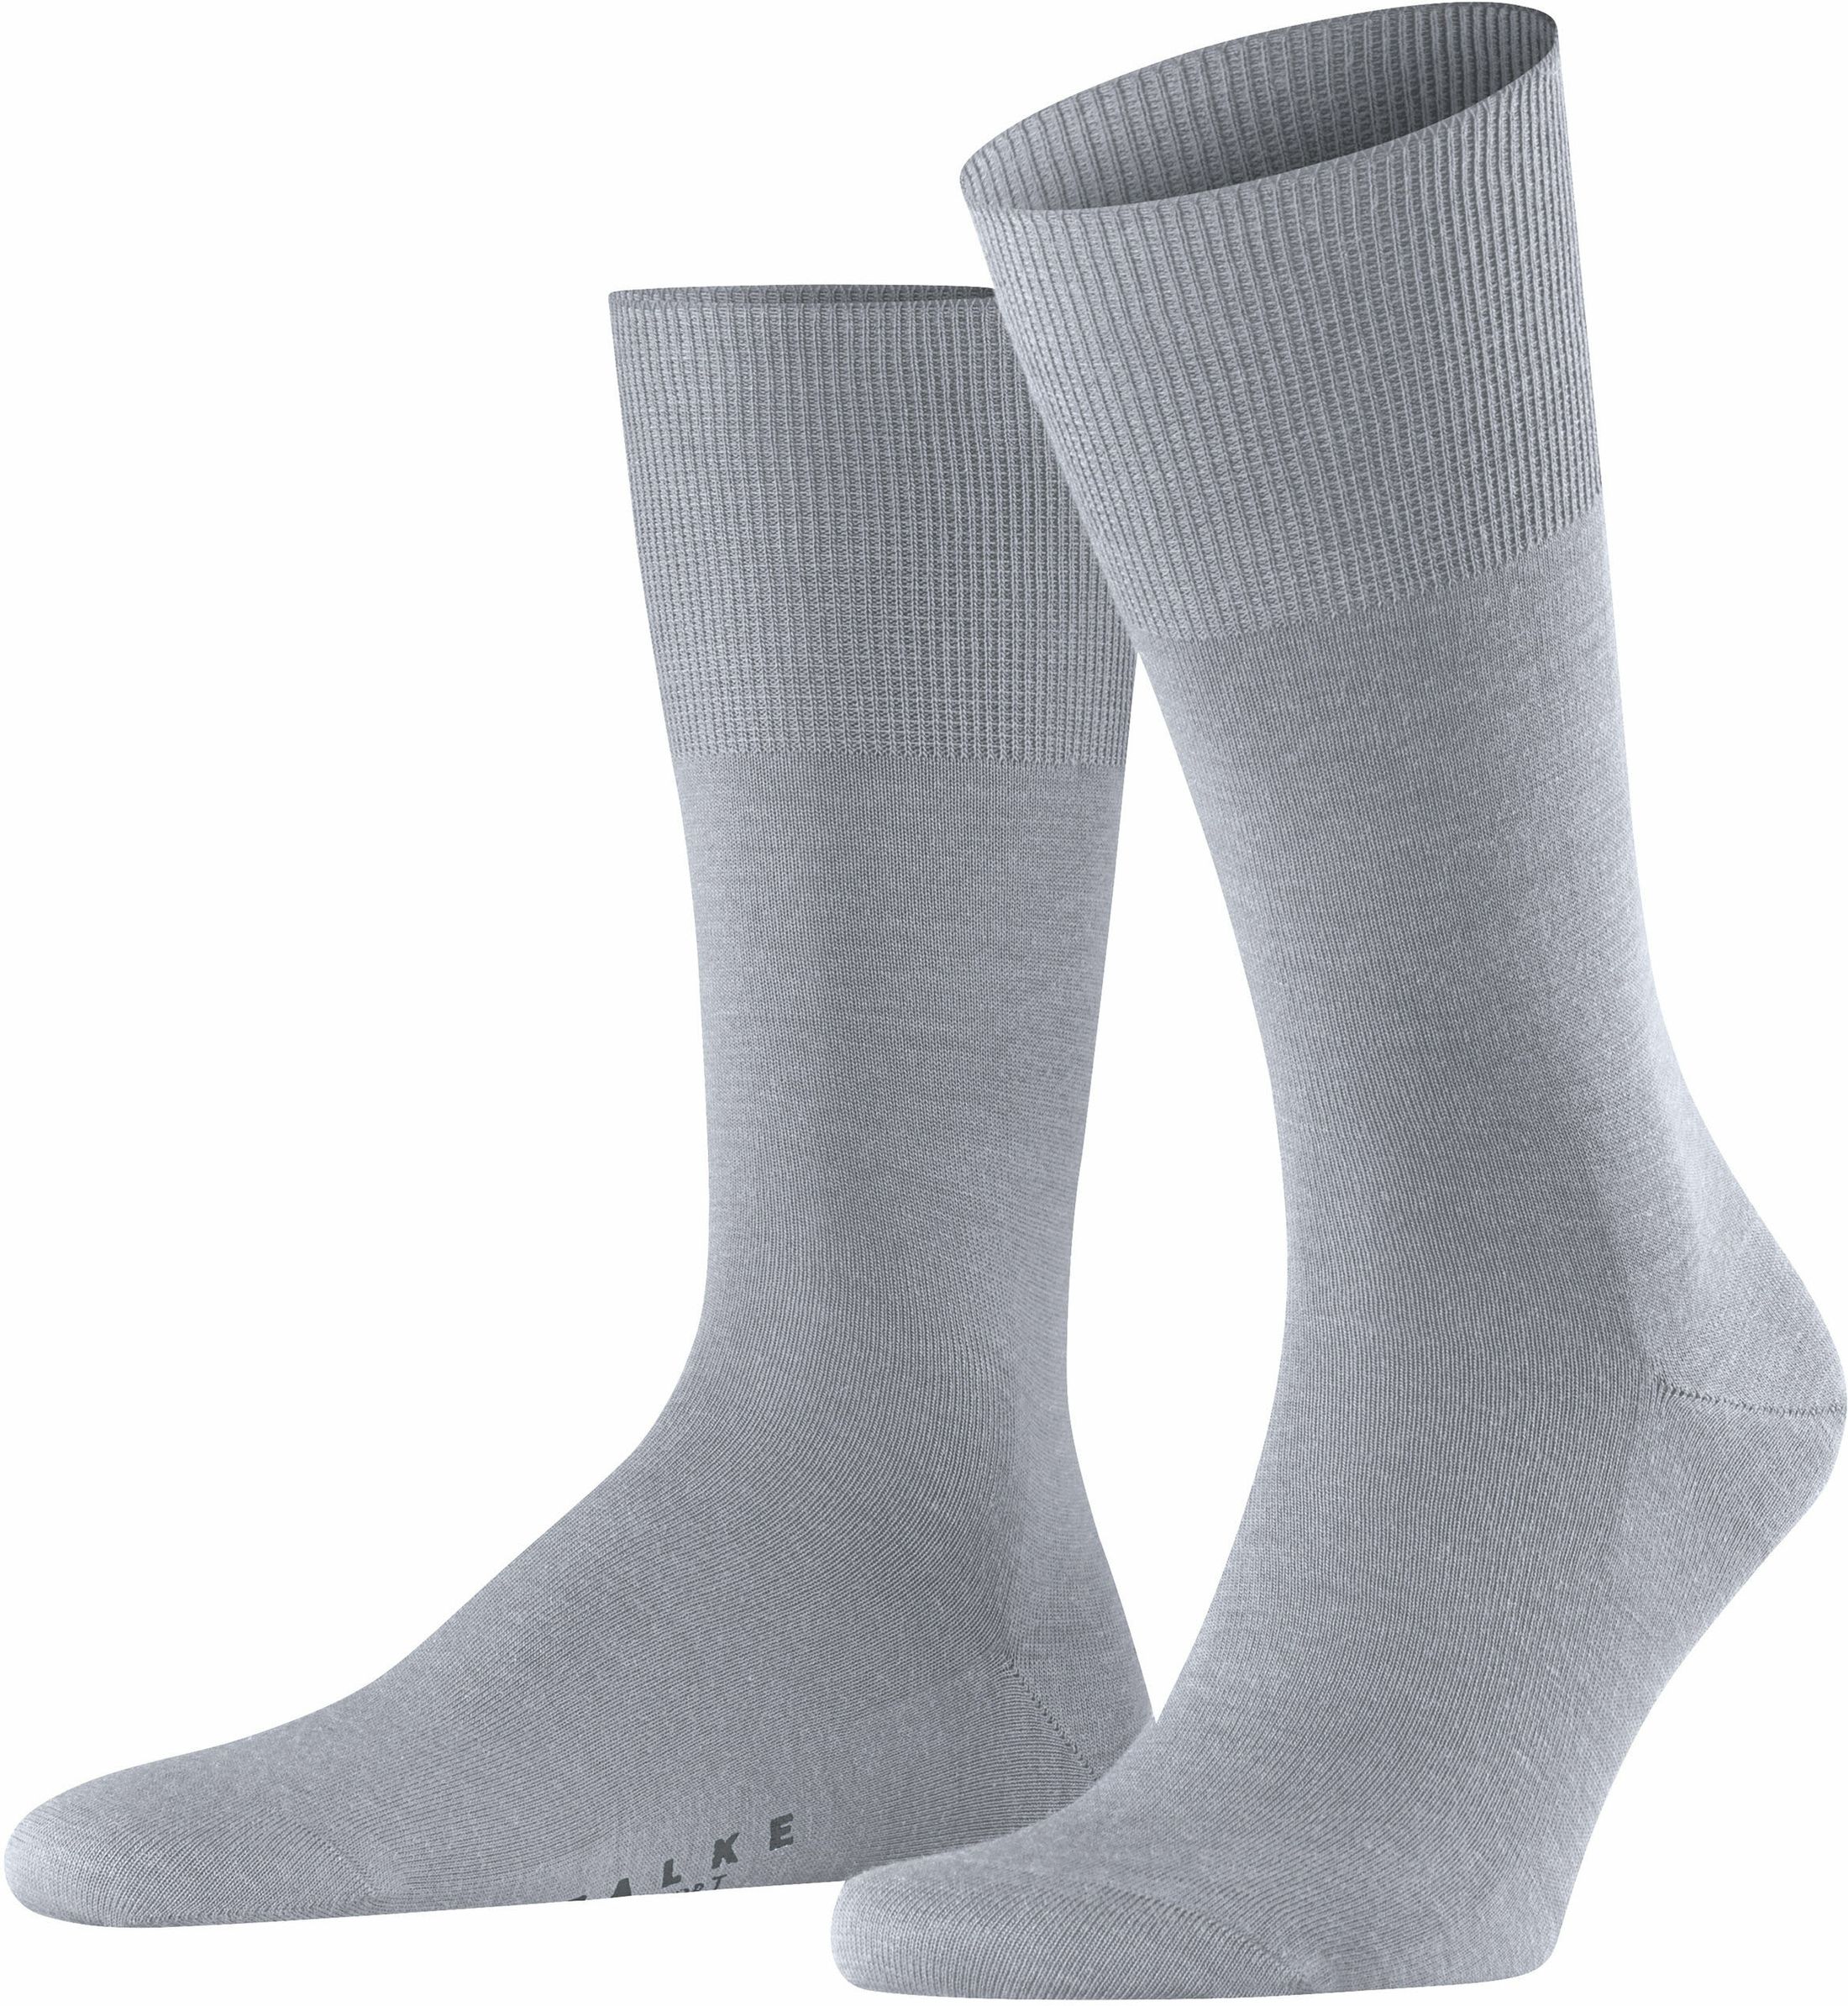 Falke Airport Sock Gray Grey size 41-42